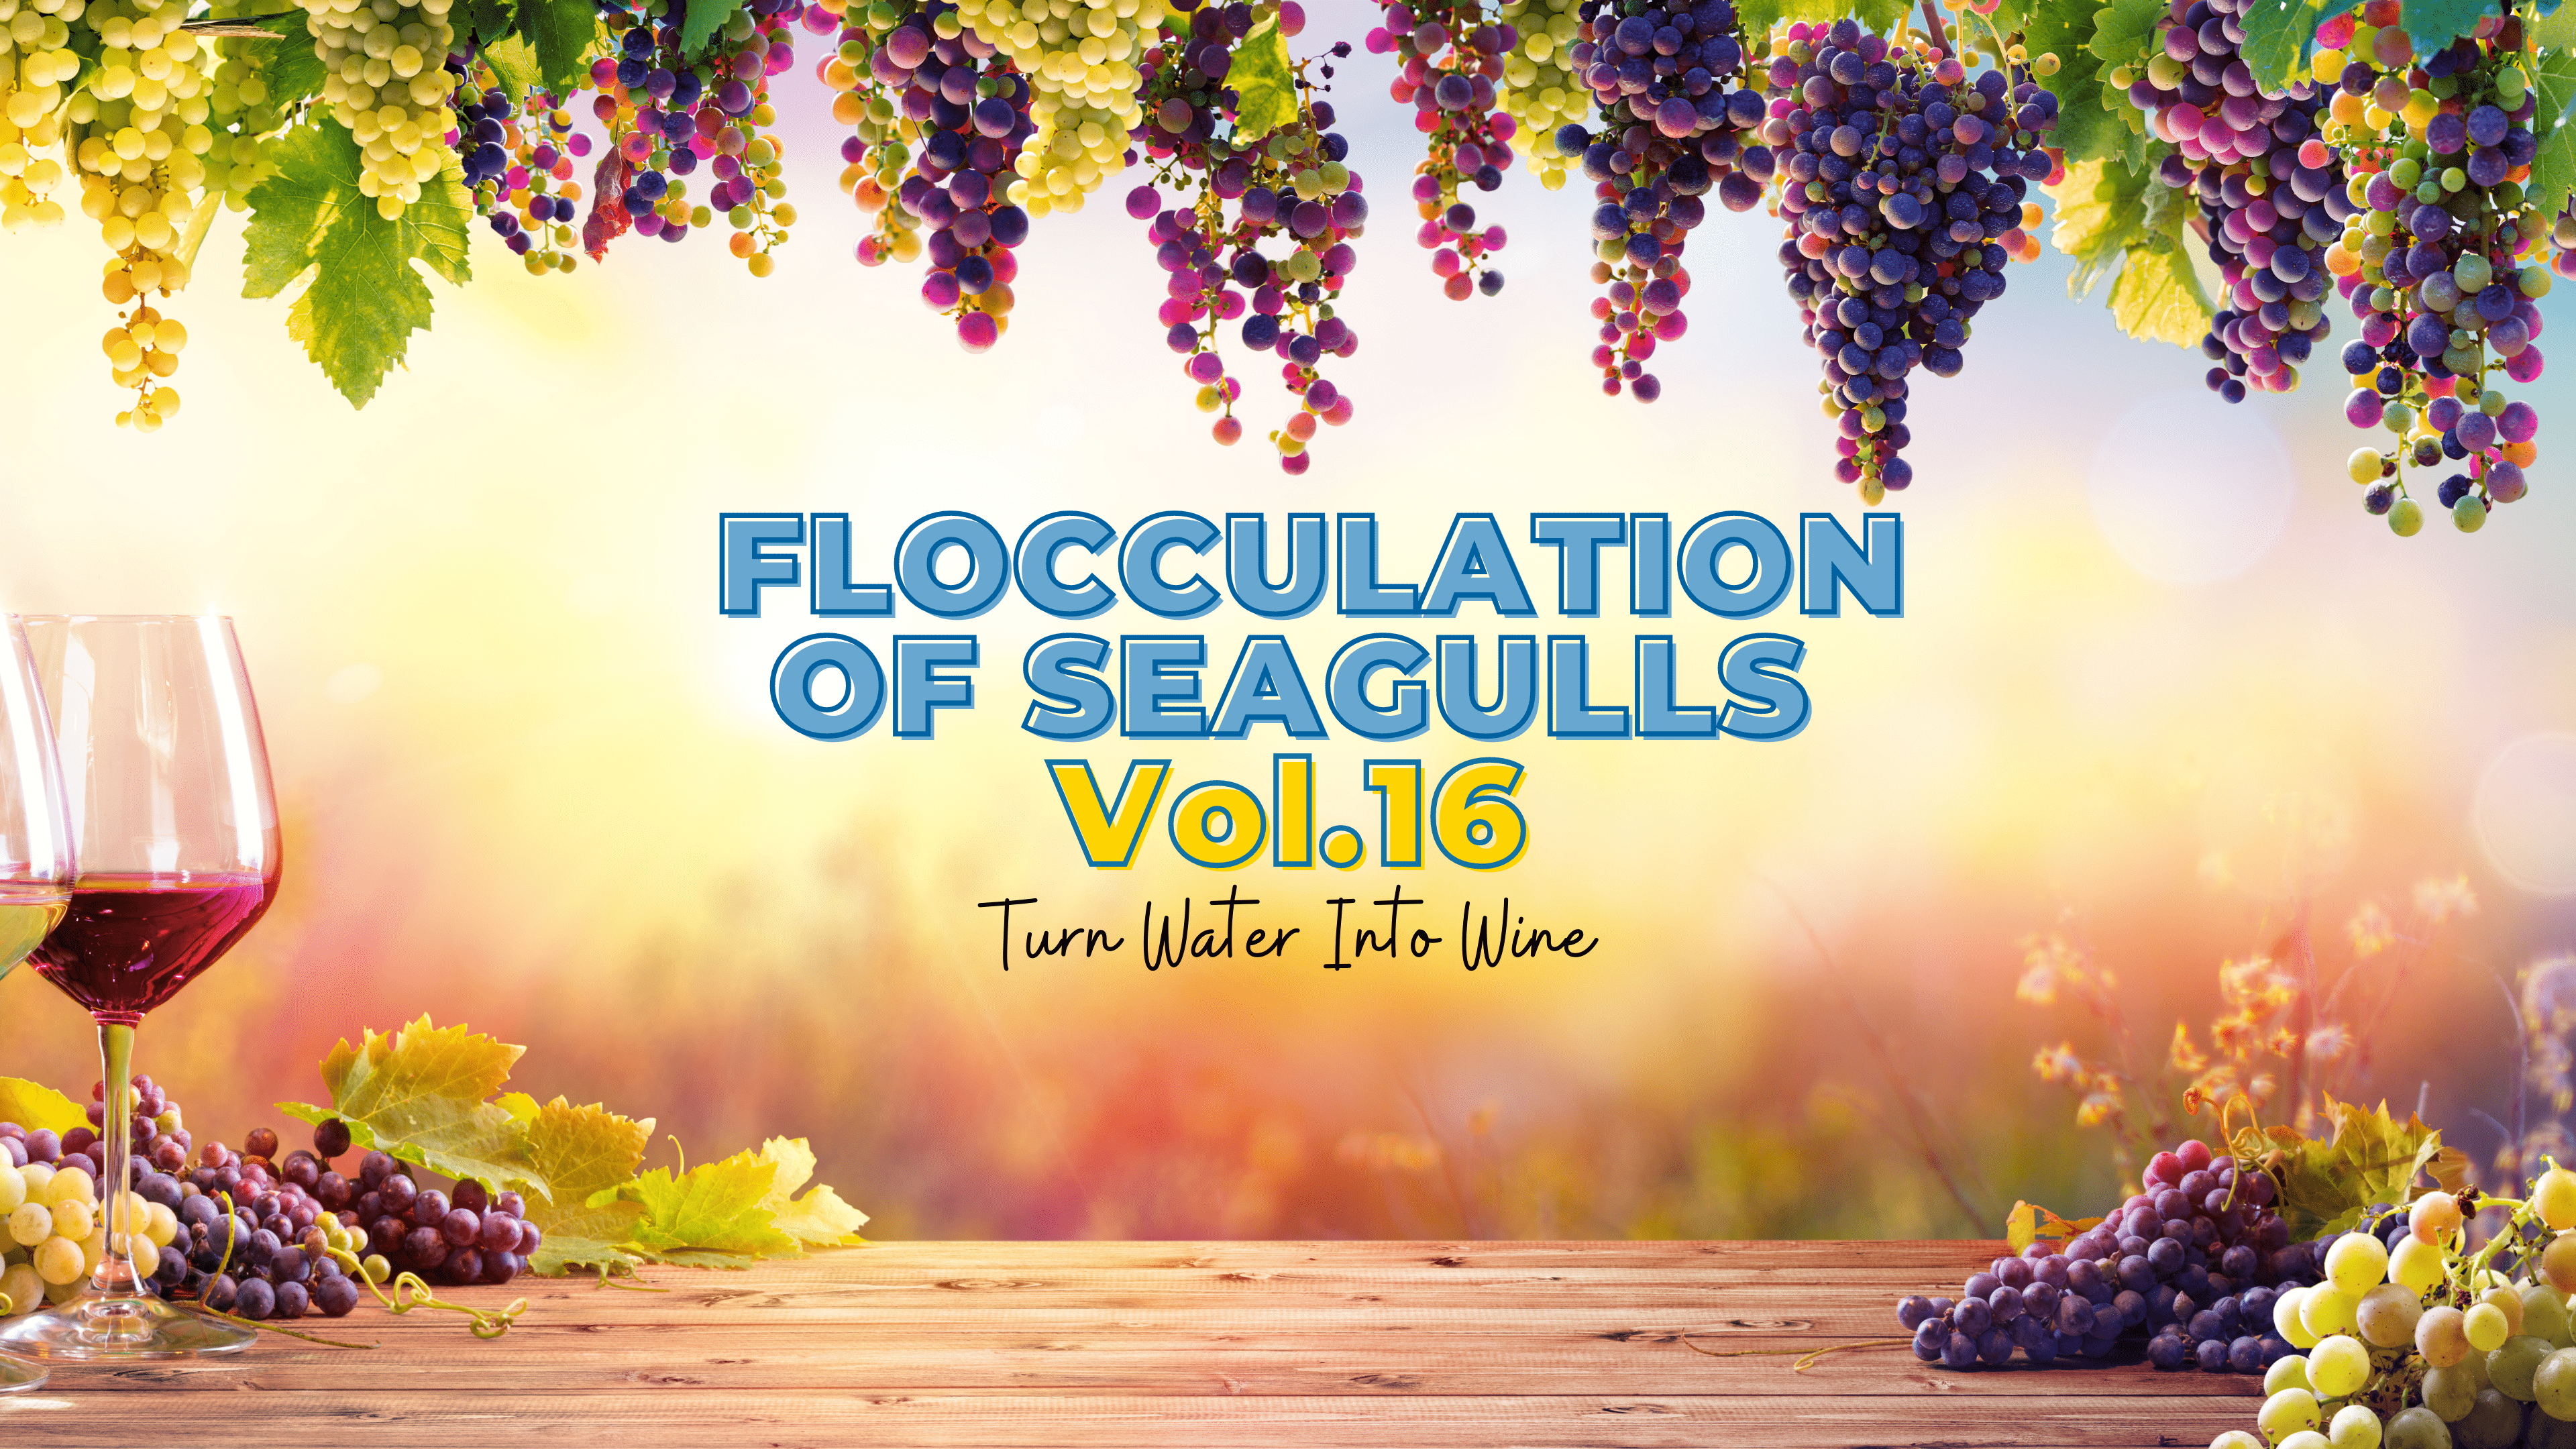 Flocculation of Seagulls Vol 16 Banner